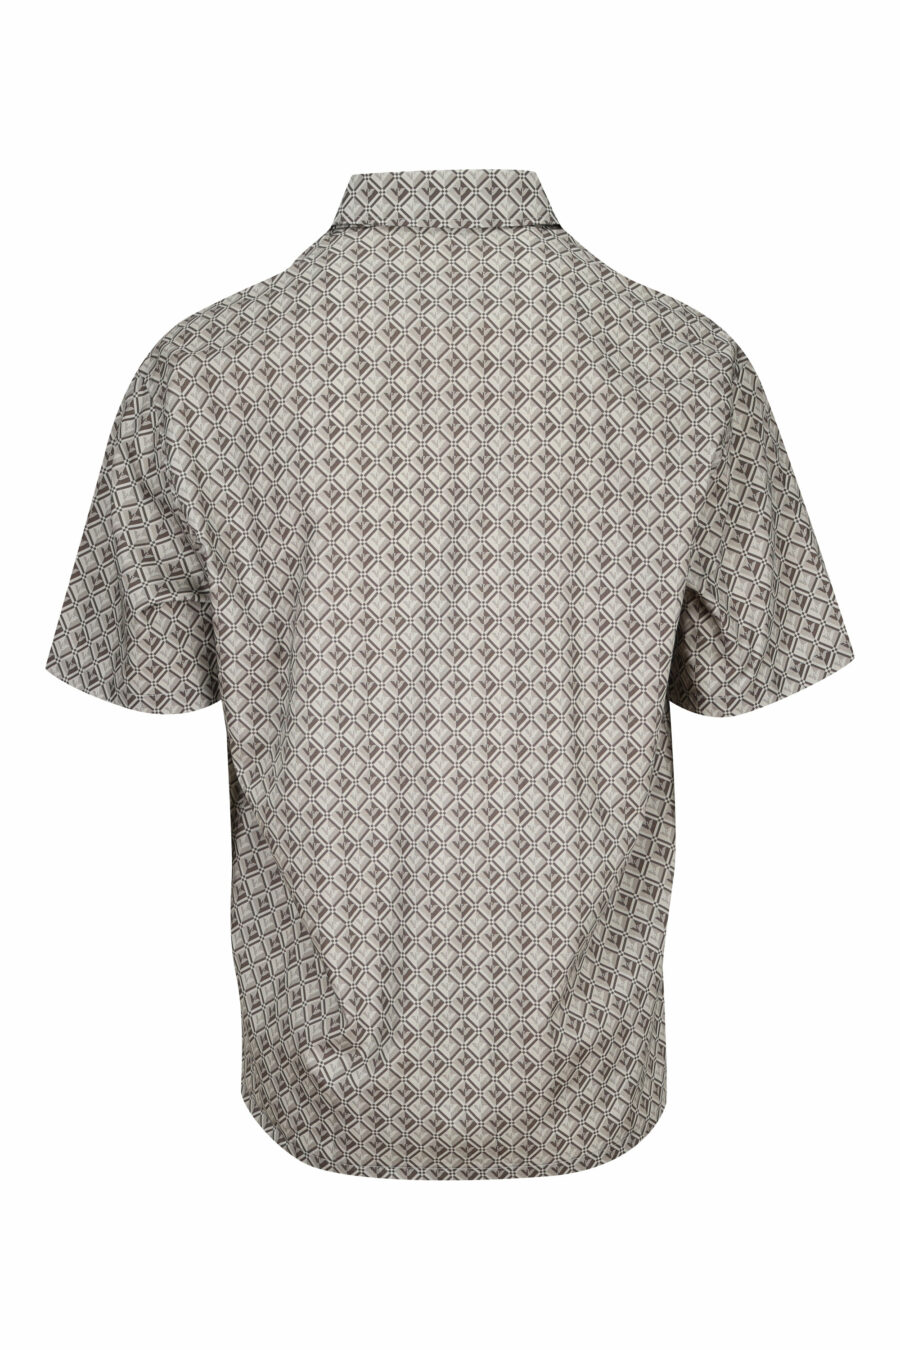 Kurzärmeliges graues Rautenhemd mit Mini-Logo - 8057970851387 1